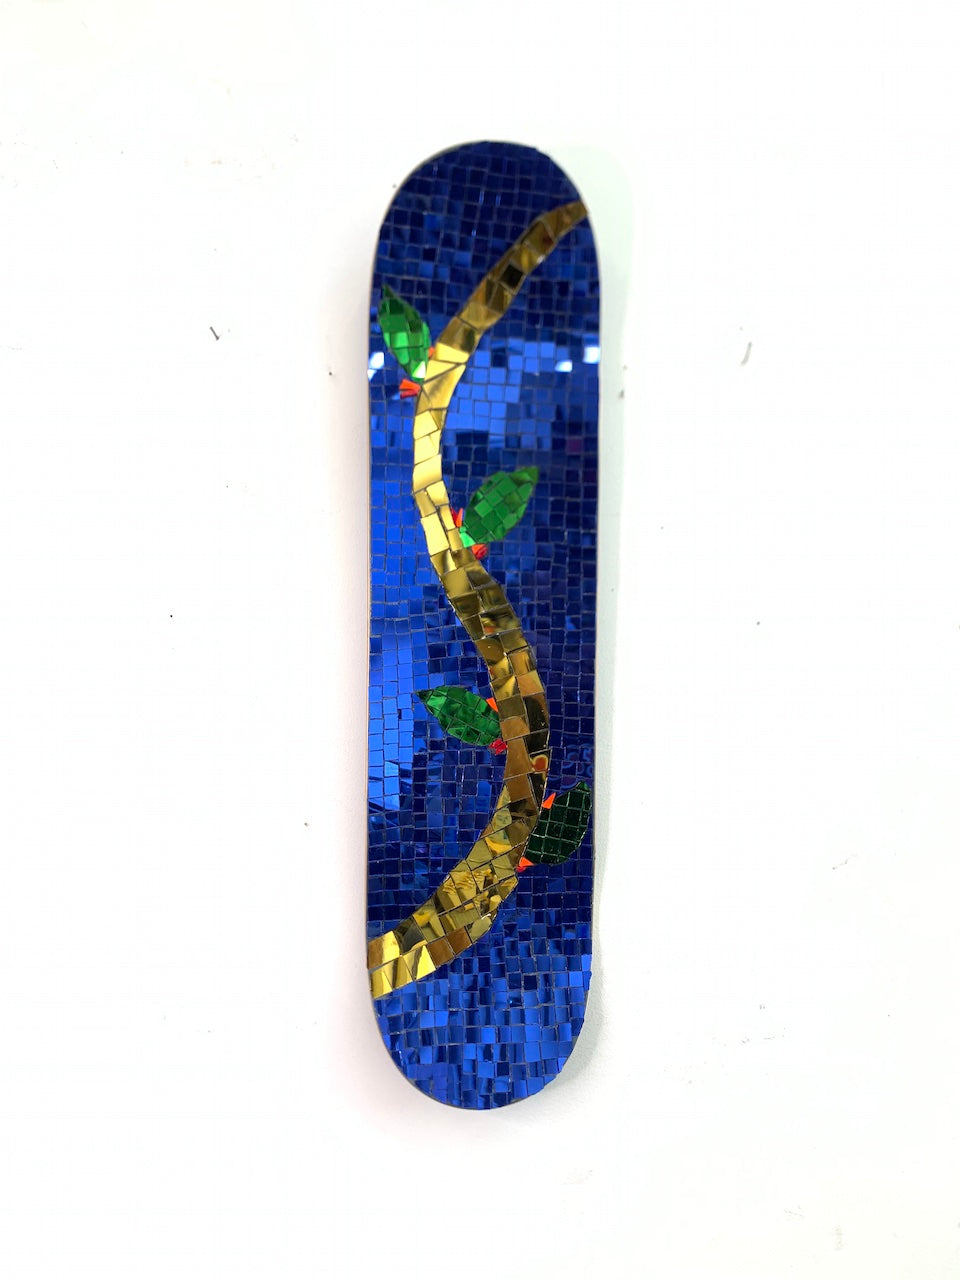 Thai mirror glass  skateboard depicting spring  Edit alt text